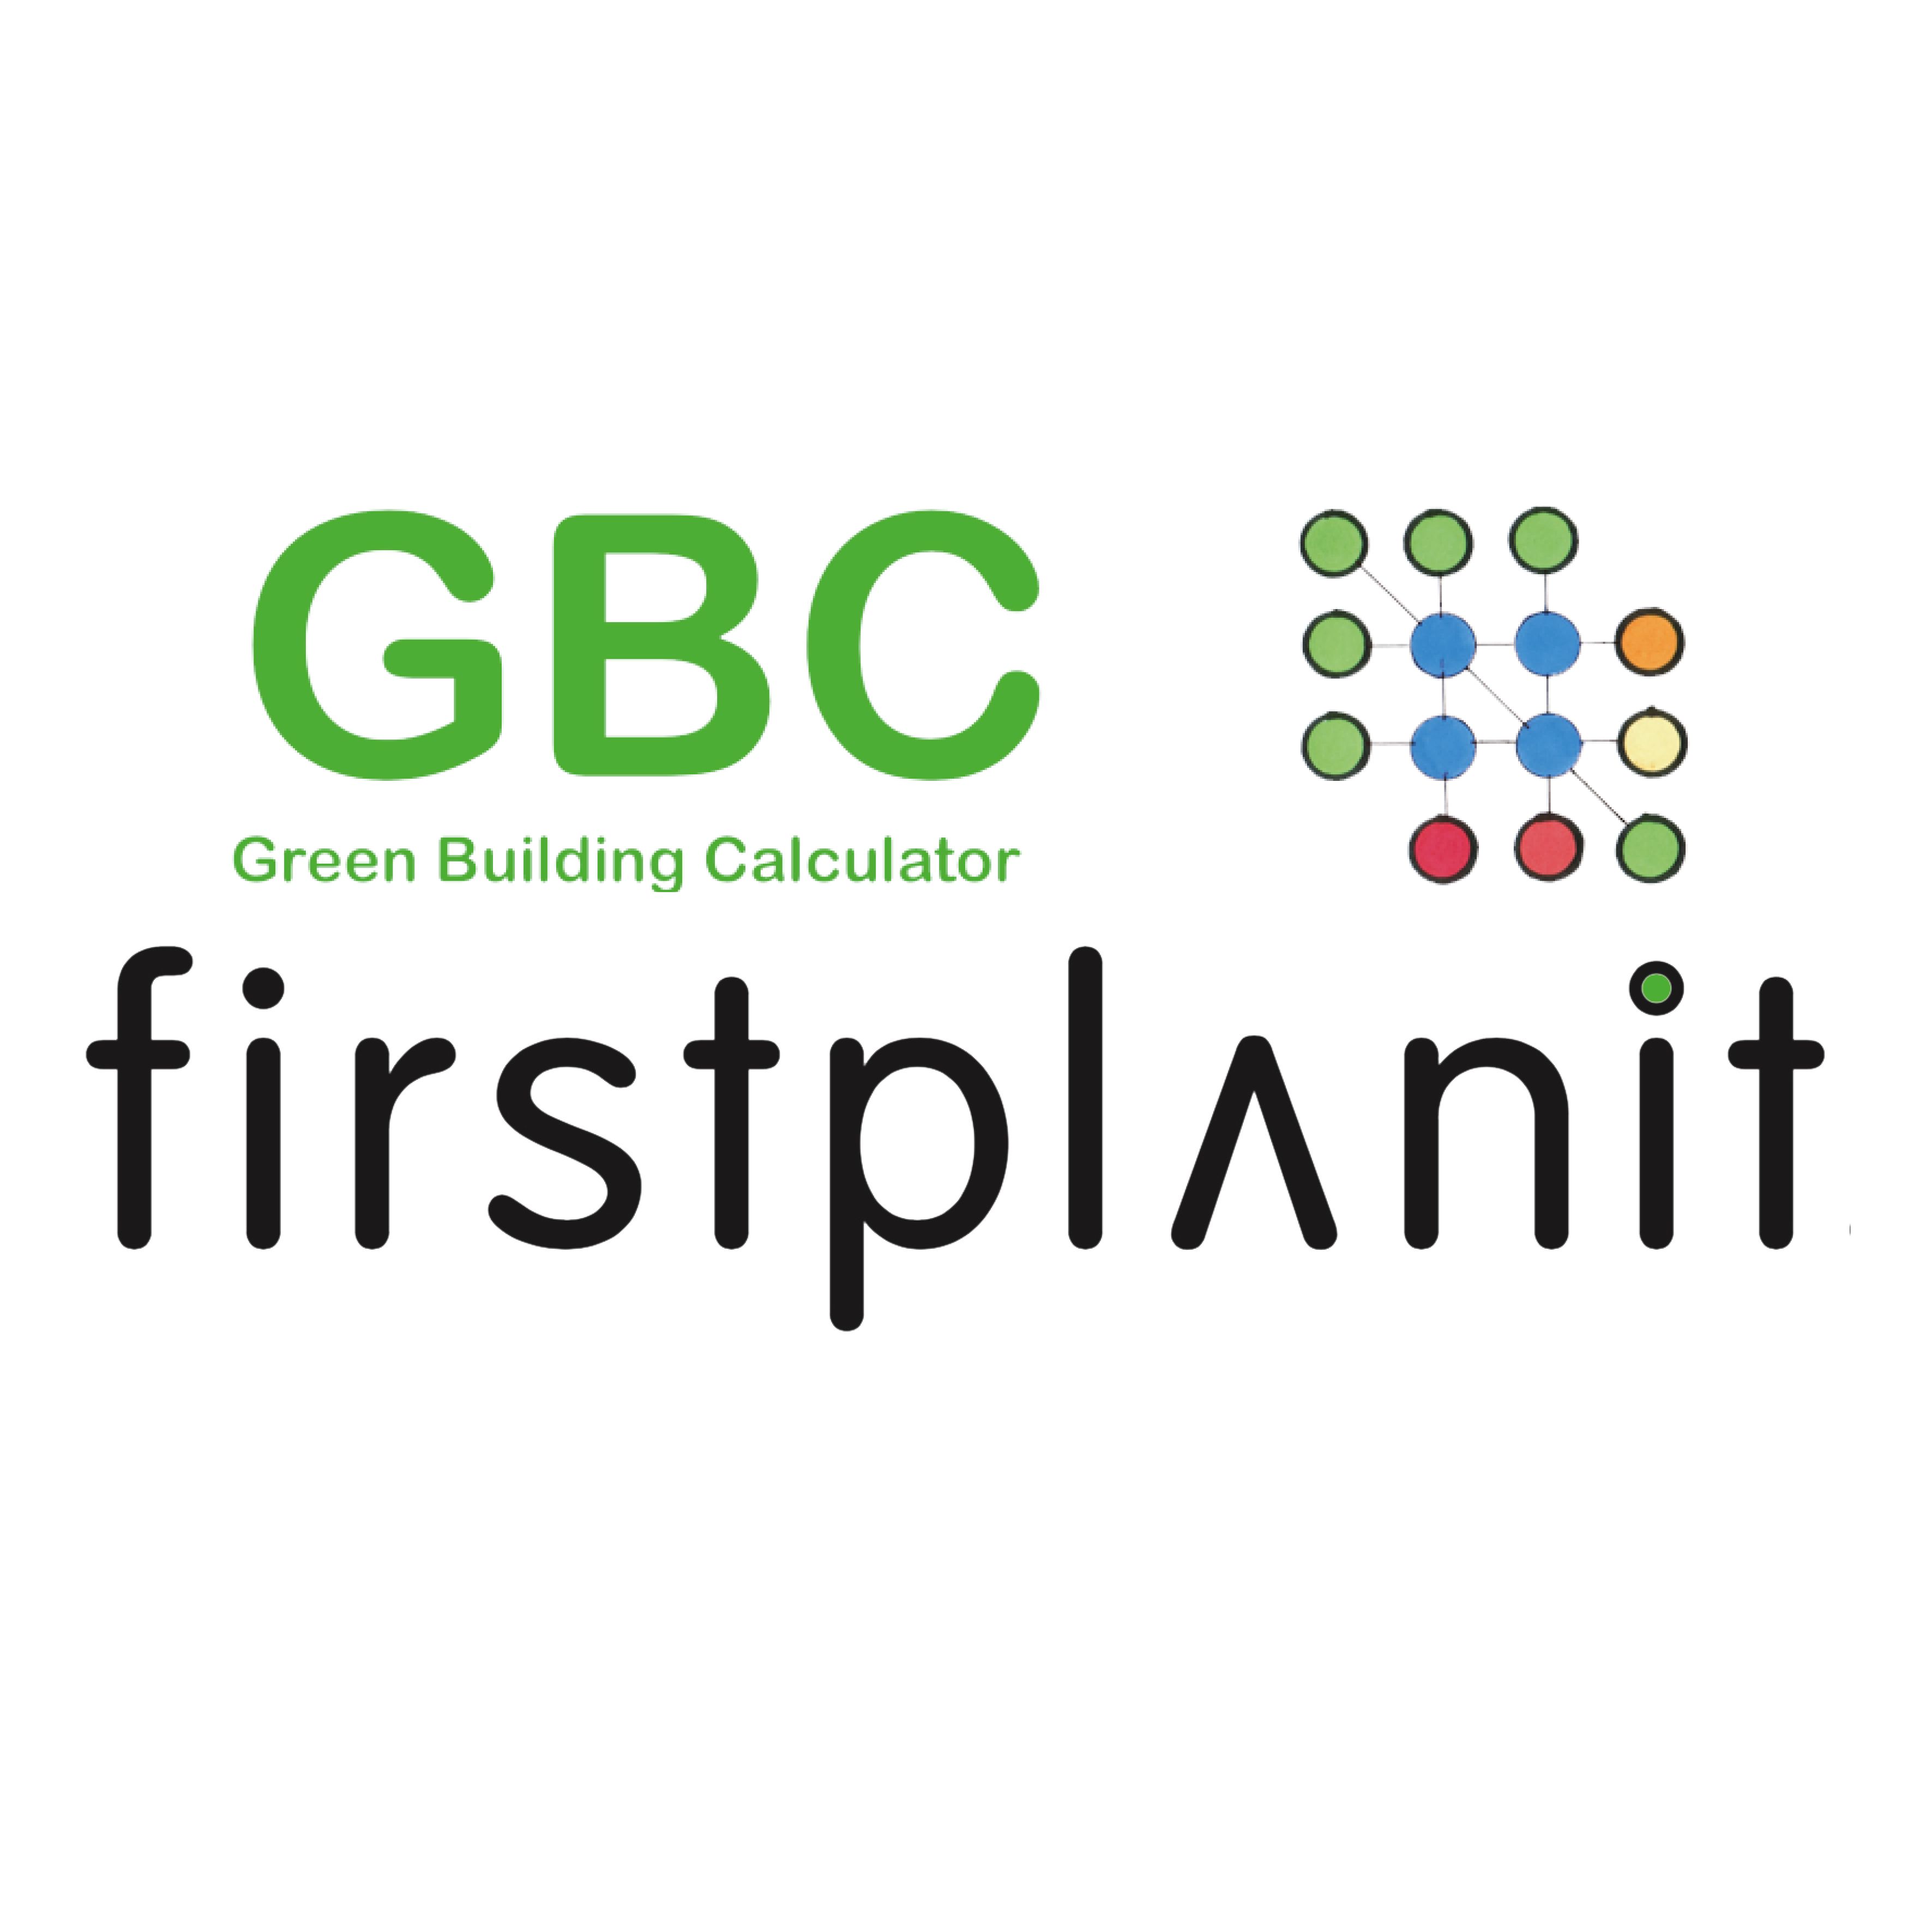 Firstplanit+Green Building Calculator